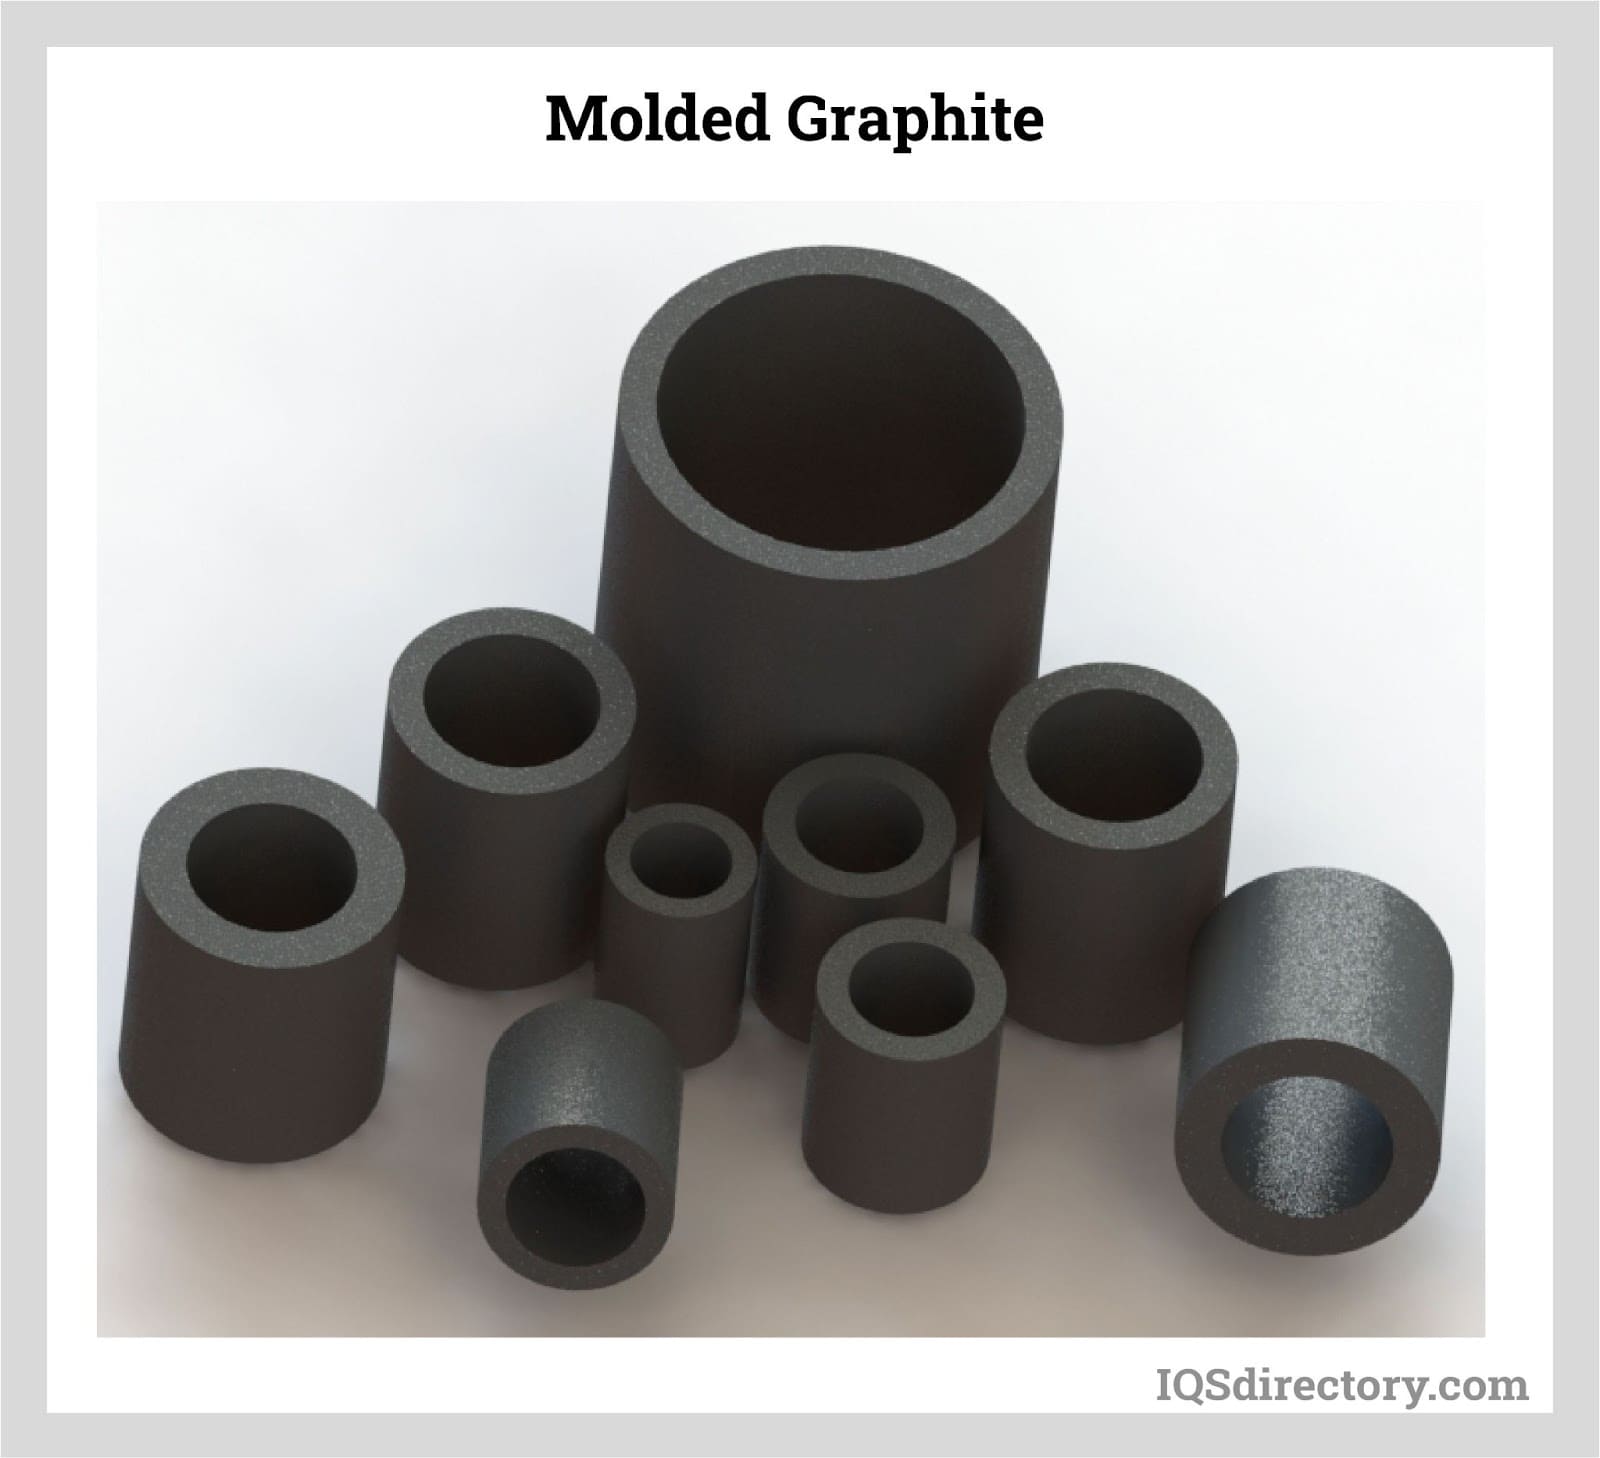 Large diameter Phenolic Impregnated graphite blocks supplied to